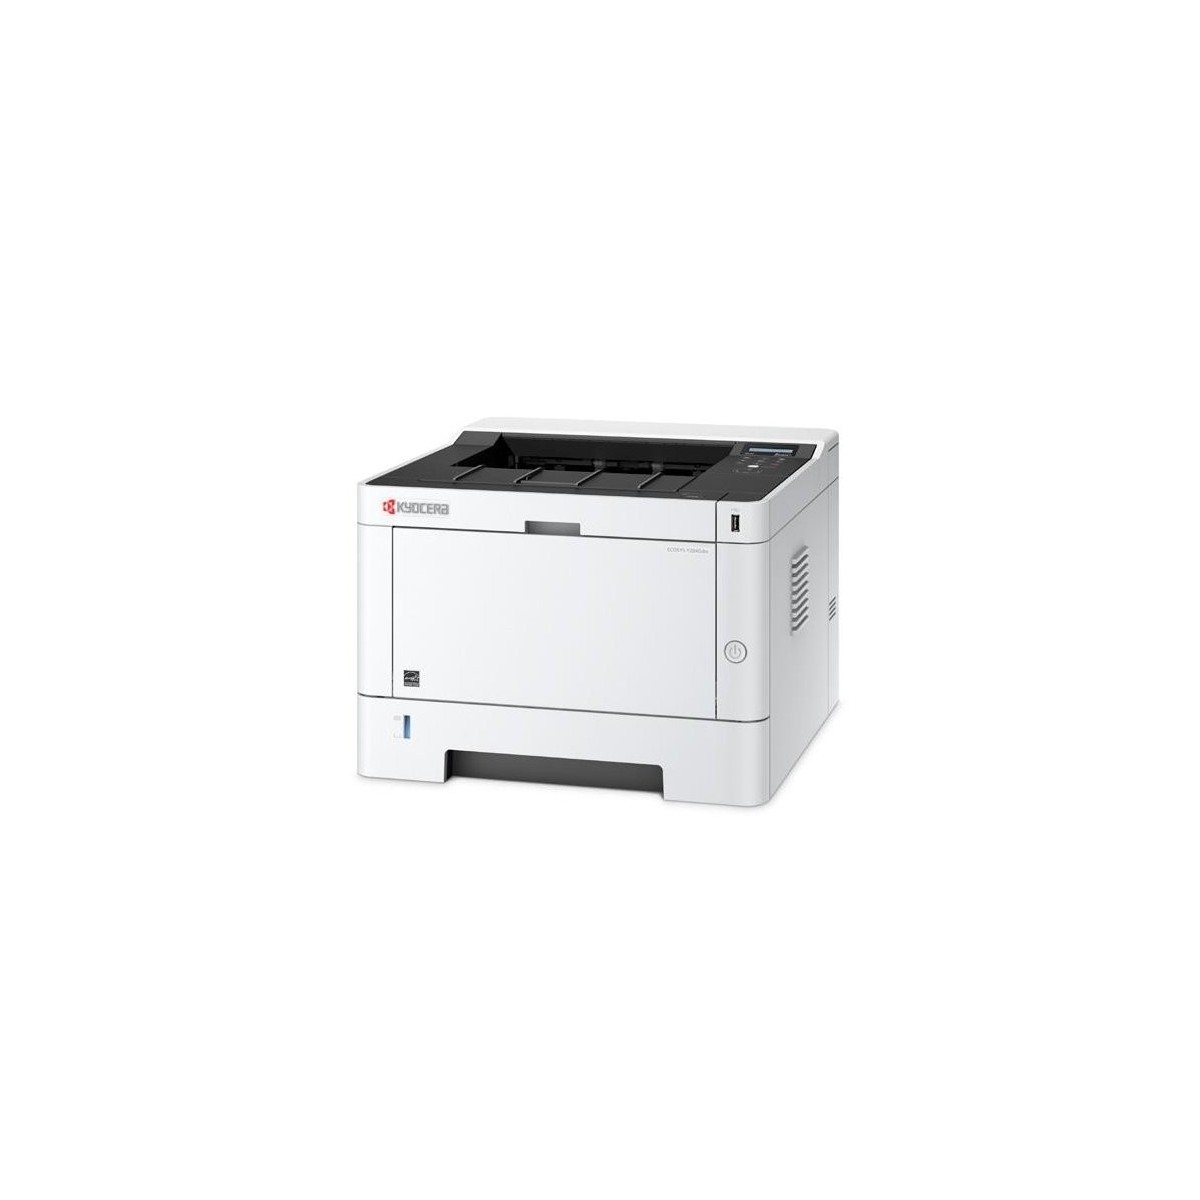 Kyocera ECOSYS P2235dn - Laser - 1200 x 1200 DPI - A4 - 35 ppm - Duplex printing - Network ready